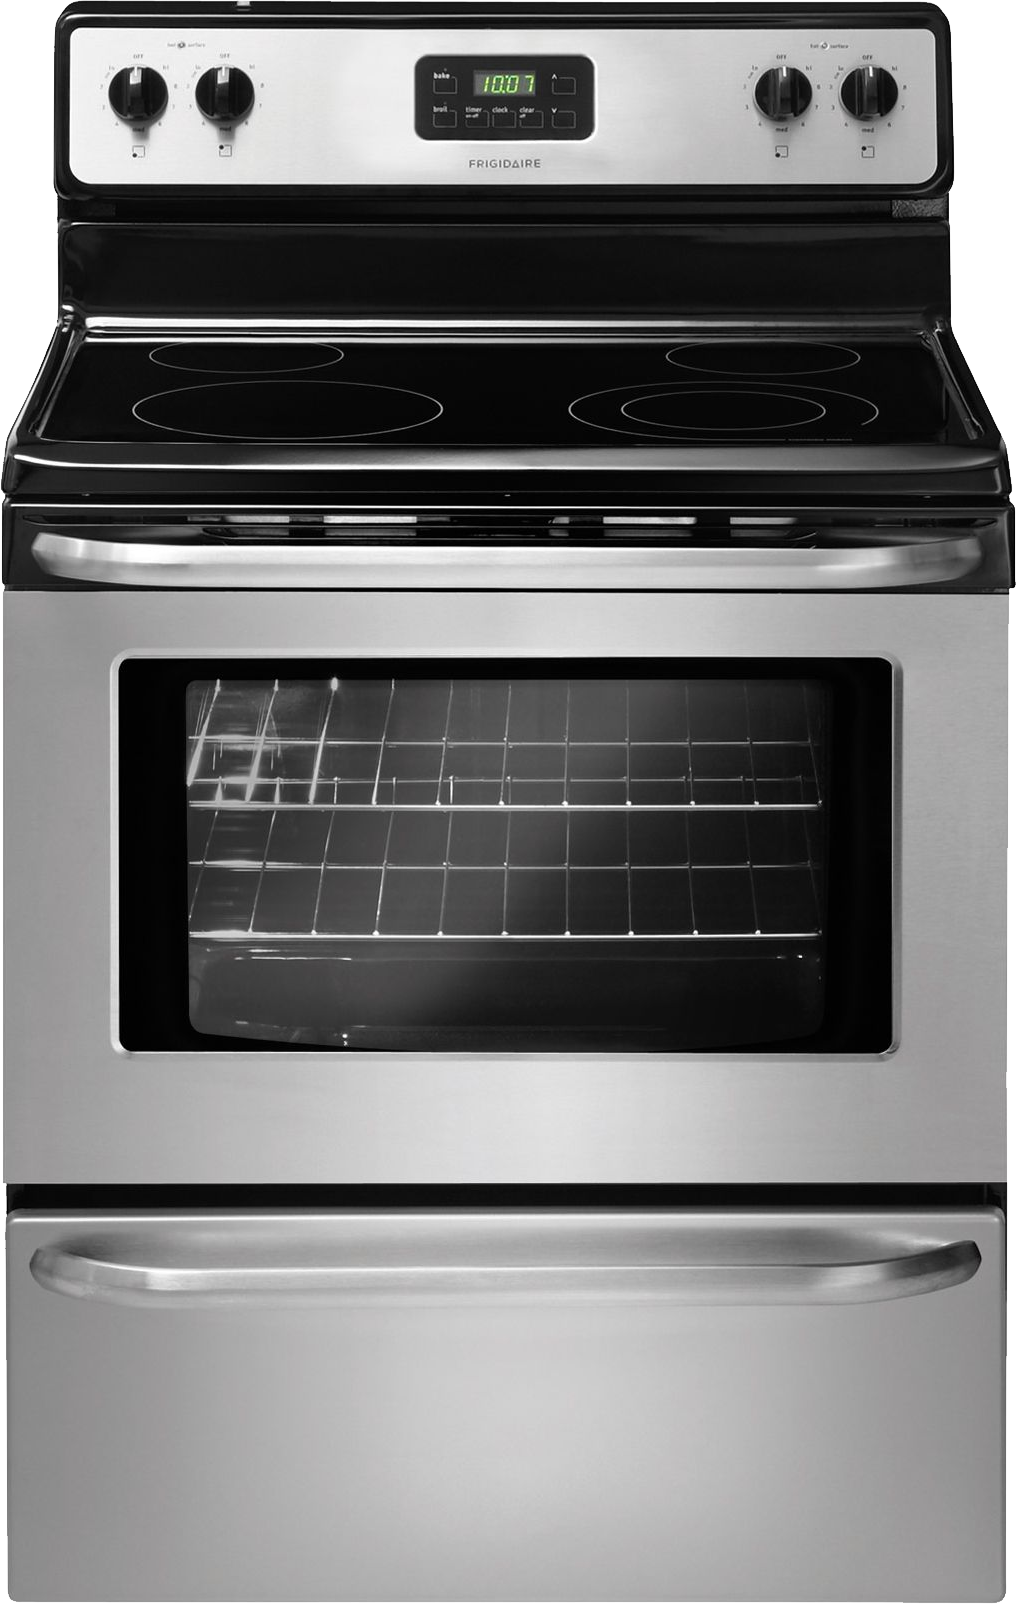 oven clipart transparent background